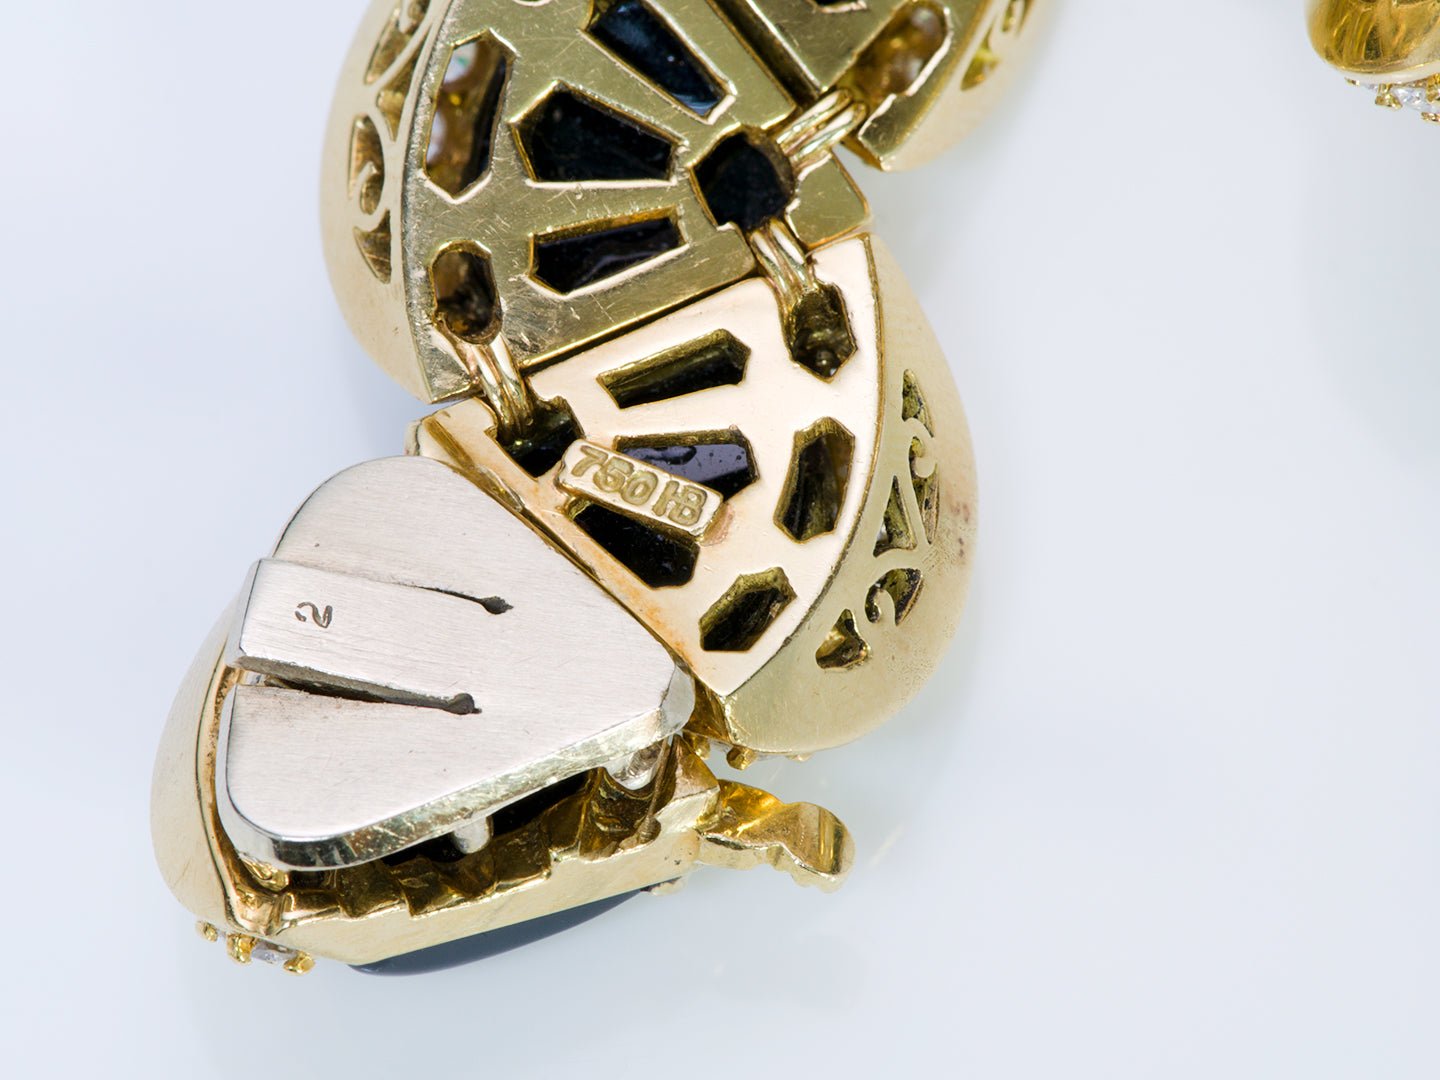 Hammerman Brothers 18K Gold Onyx Diamond Bracelet